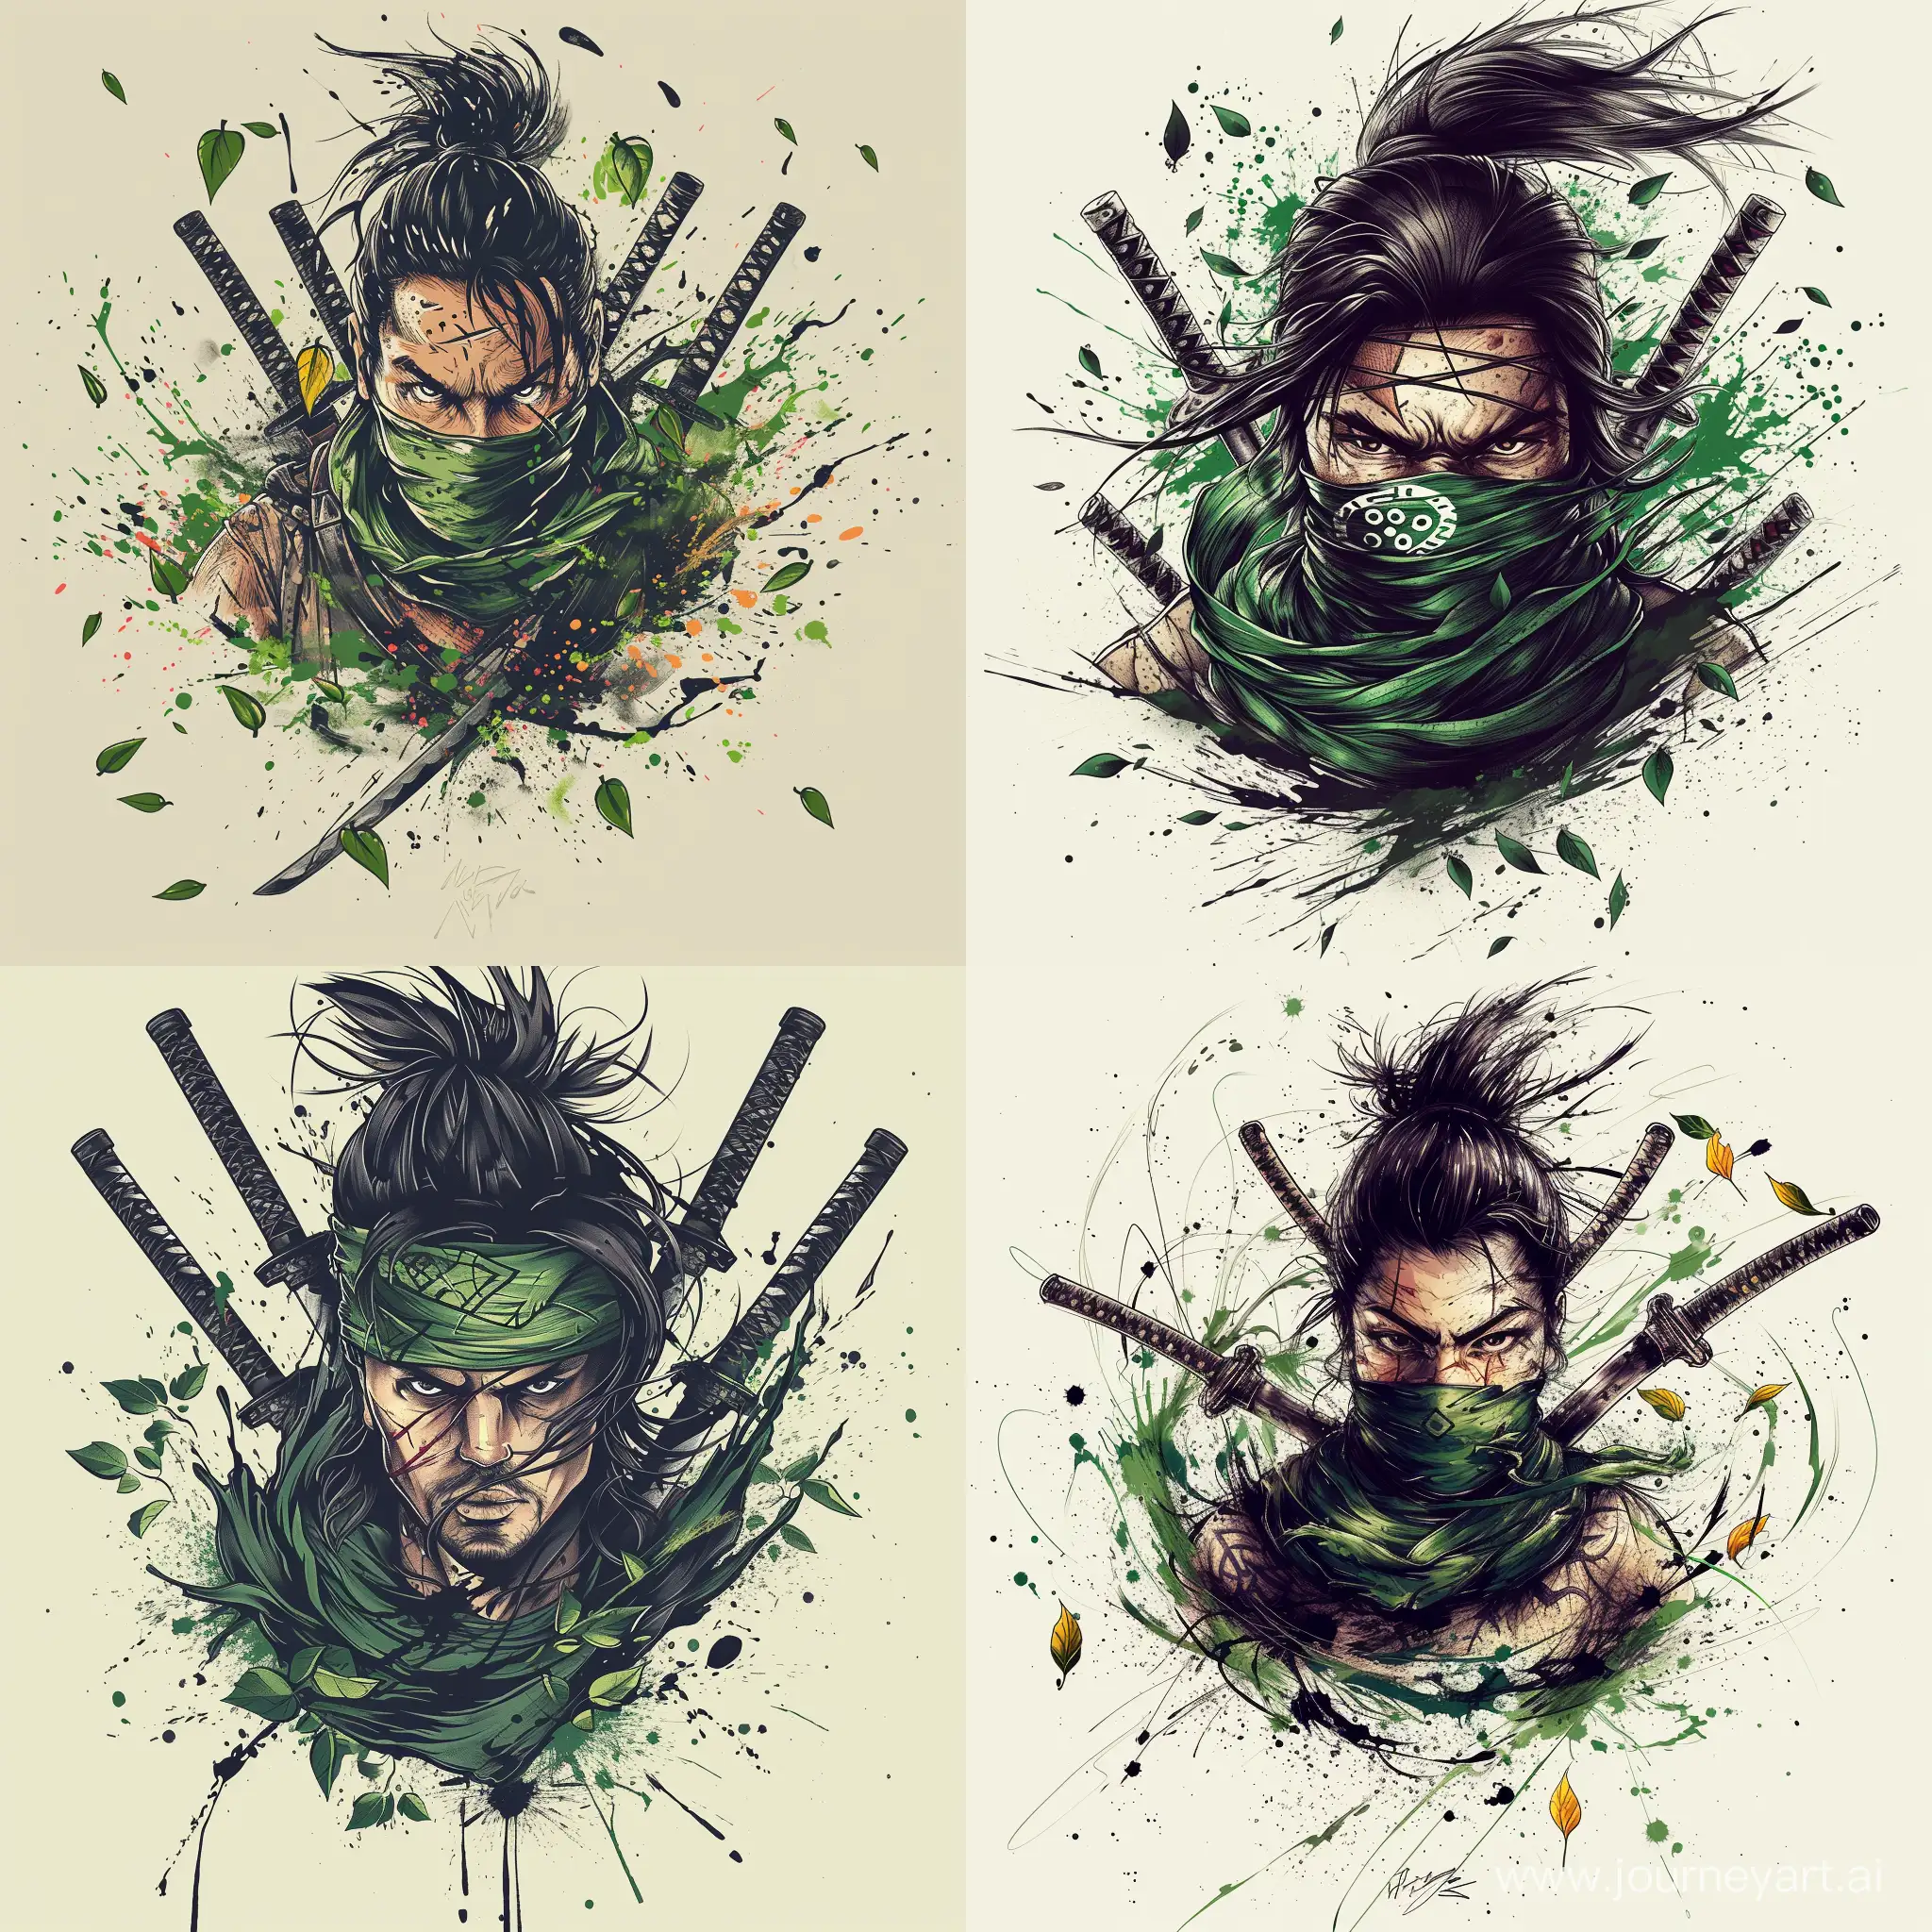 Intense-Warrior-Tattoo-Design-with-Three-Swords-and-Green-Bandana